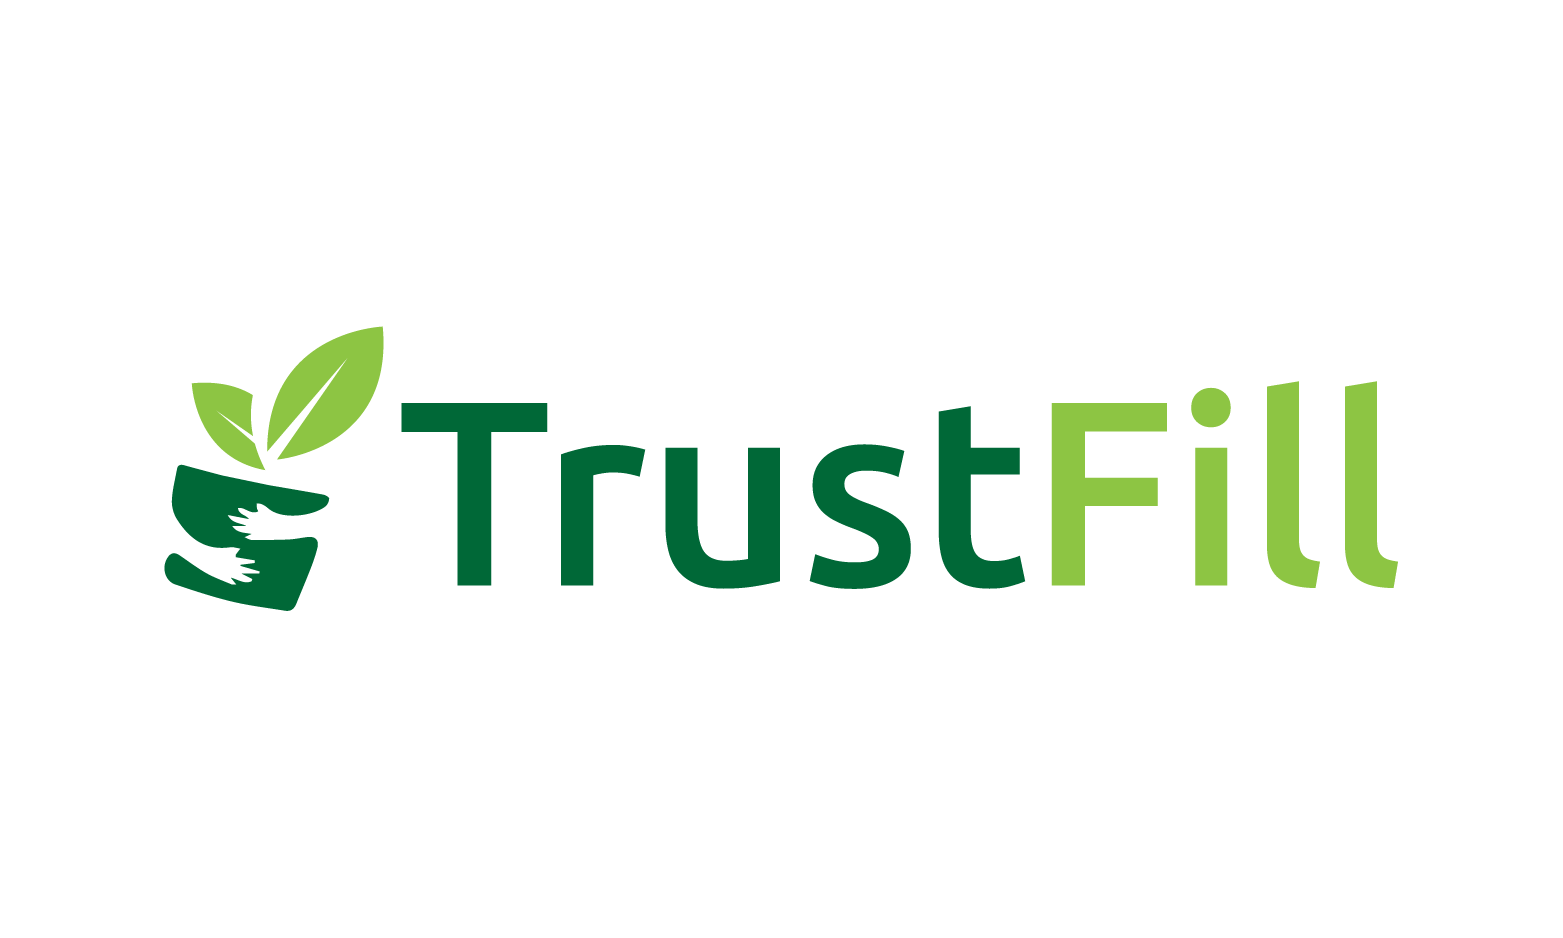 TrustFill.com - Creative brandable domain for sale